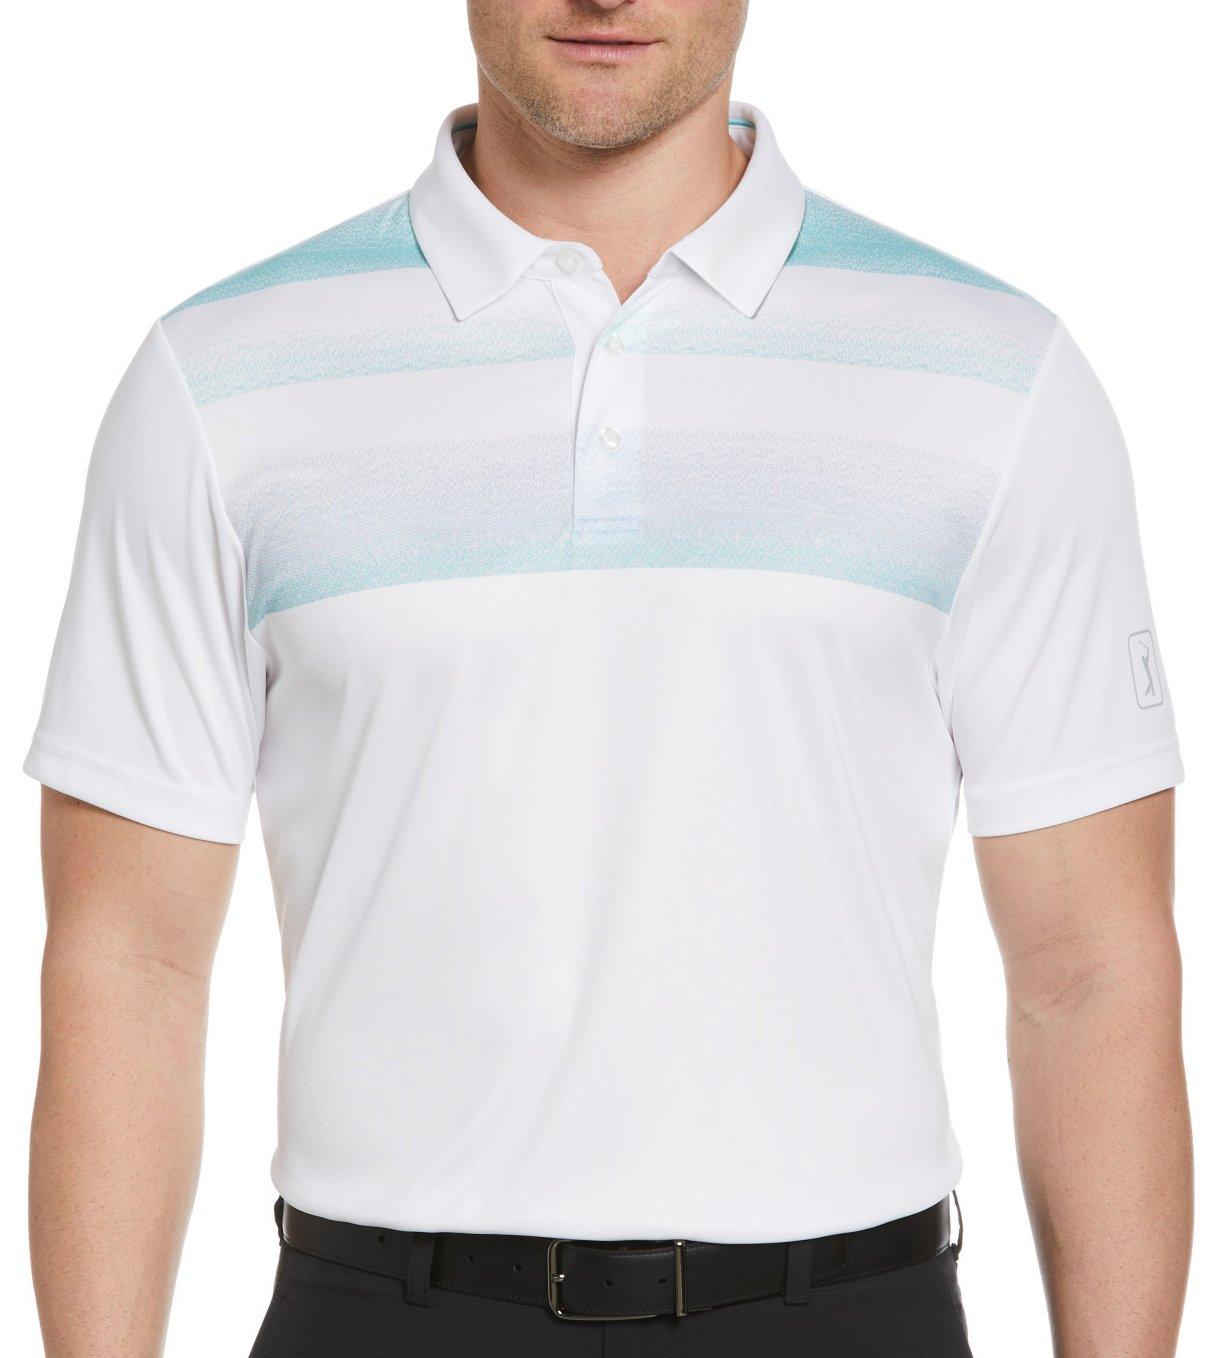 PGA TOUR Mens Stitched Chest Polo Shirt